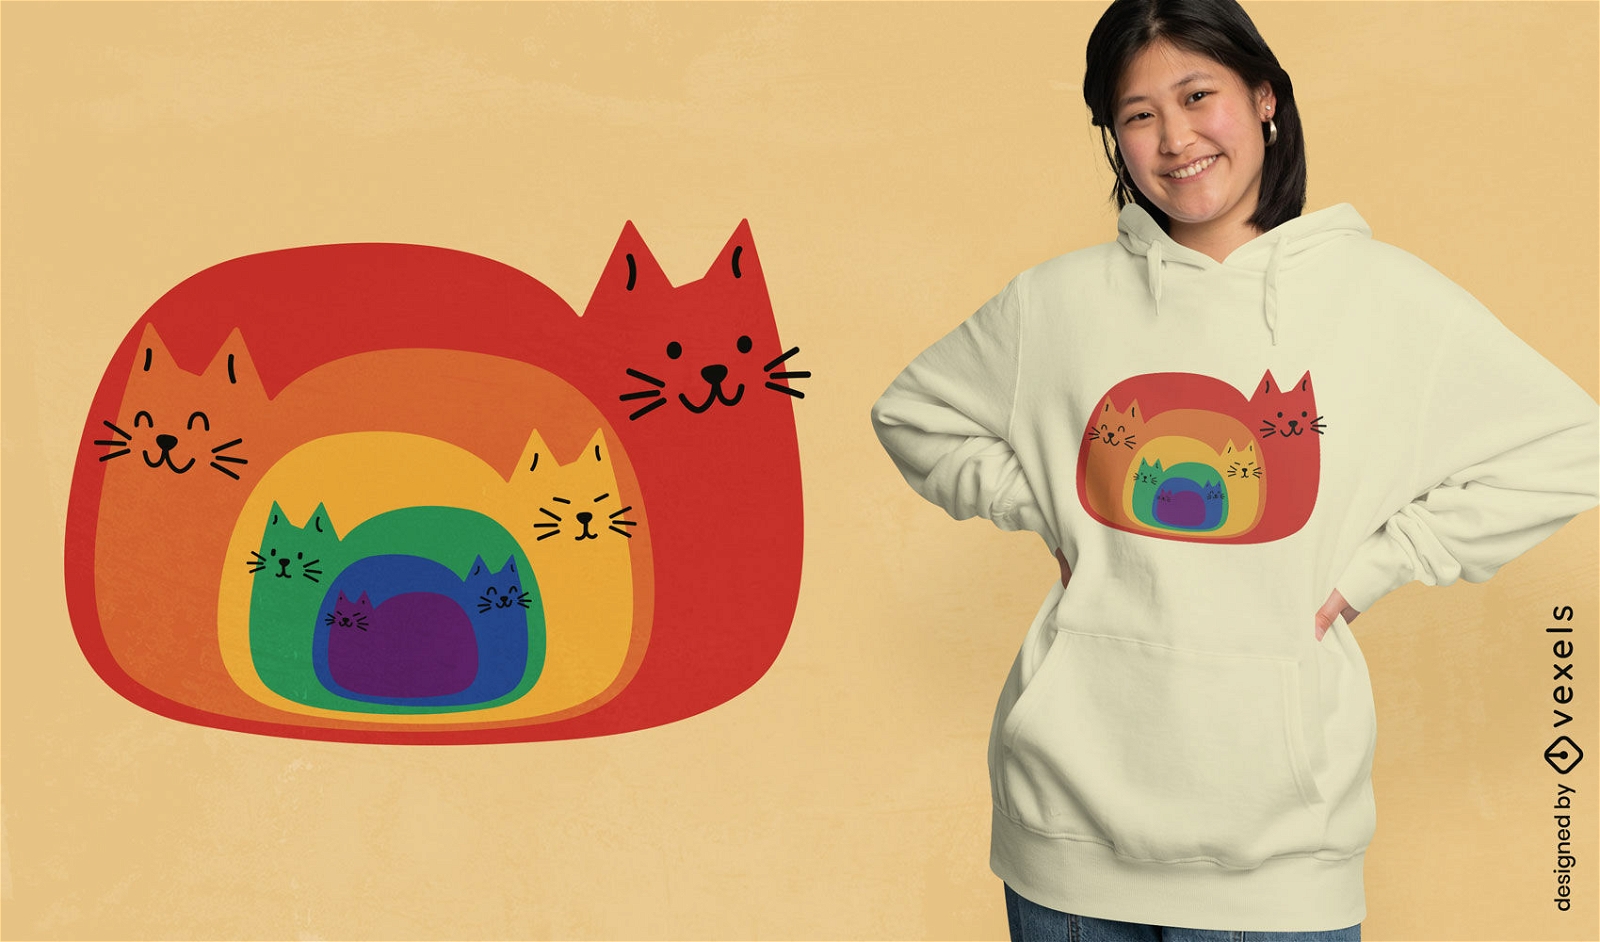 Dise?o lindo de la camiseta del arco iris animal del gato